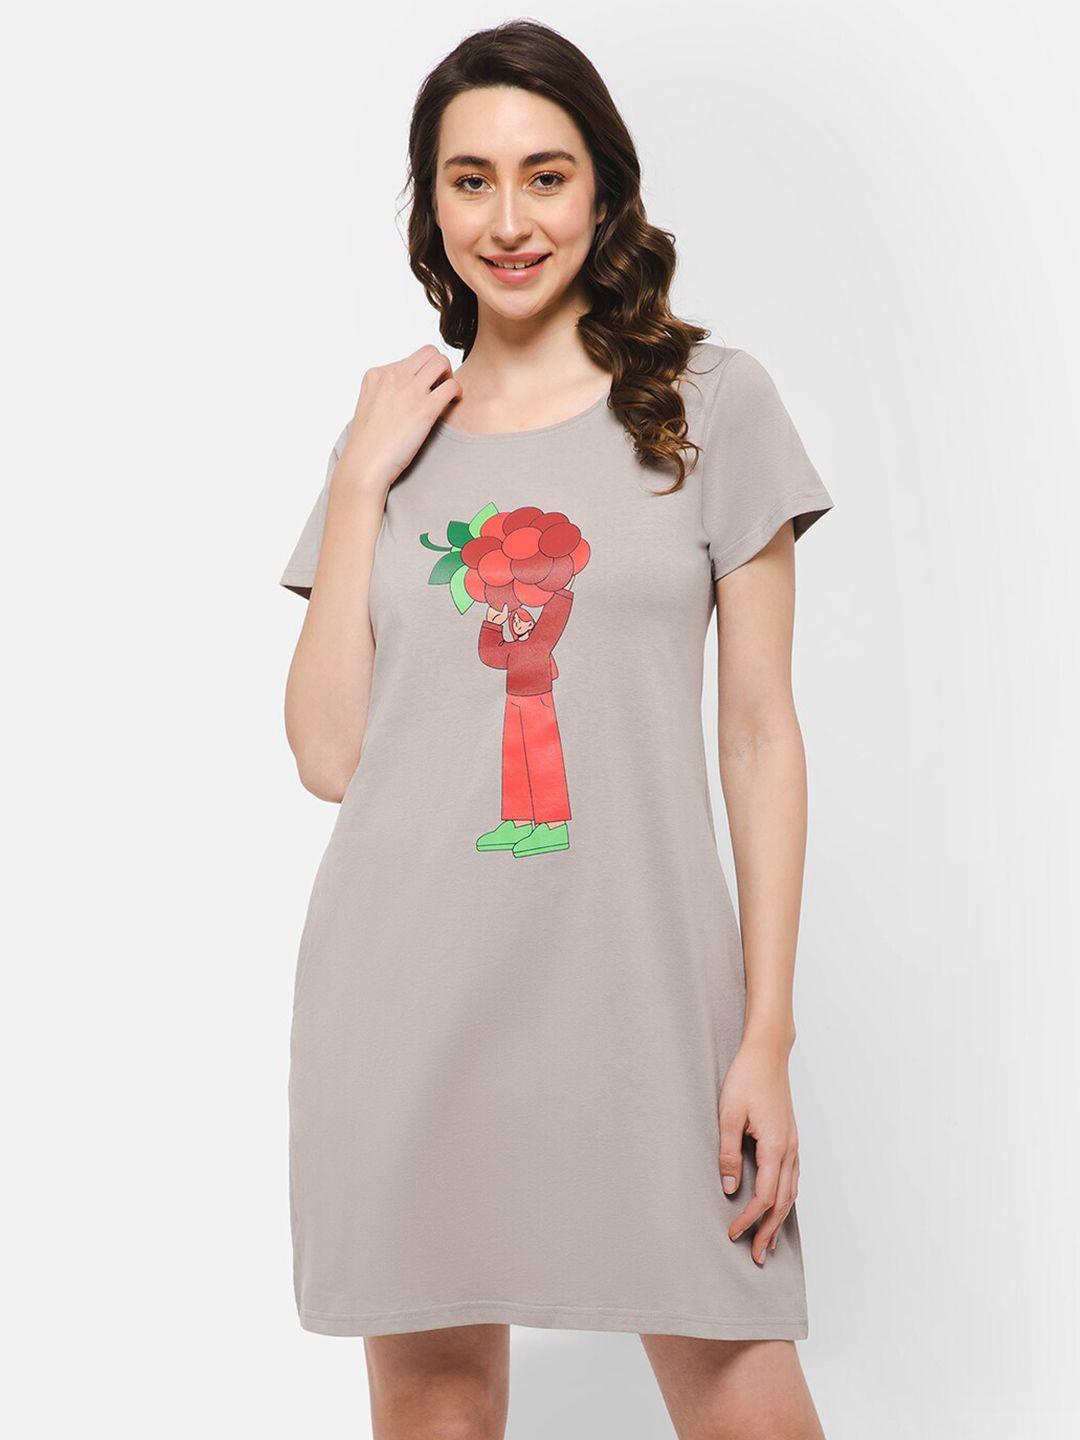 clovia-graphic-printed-pure-cotton-t-shirt-nightdress